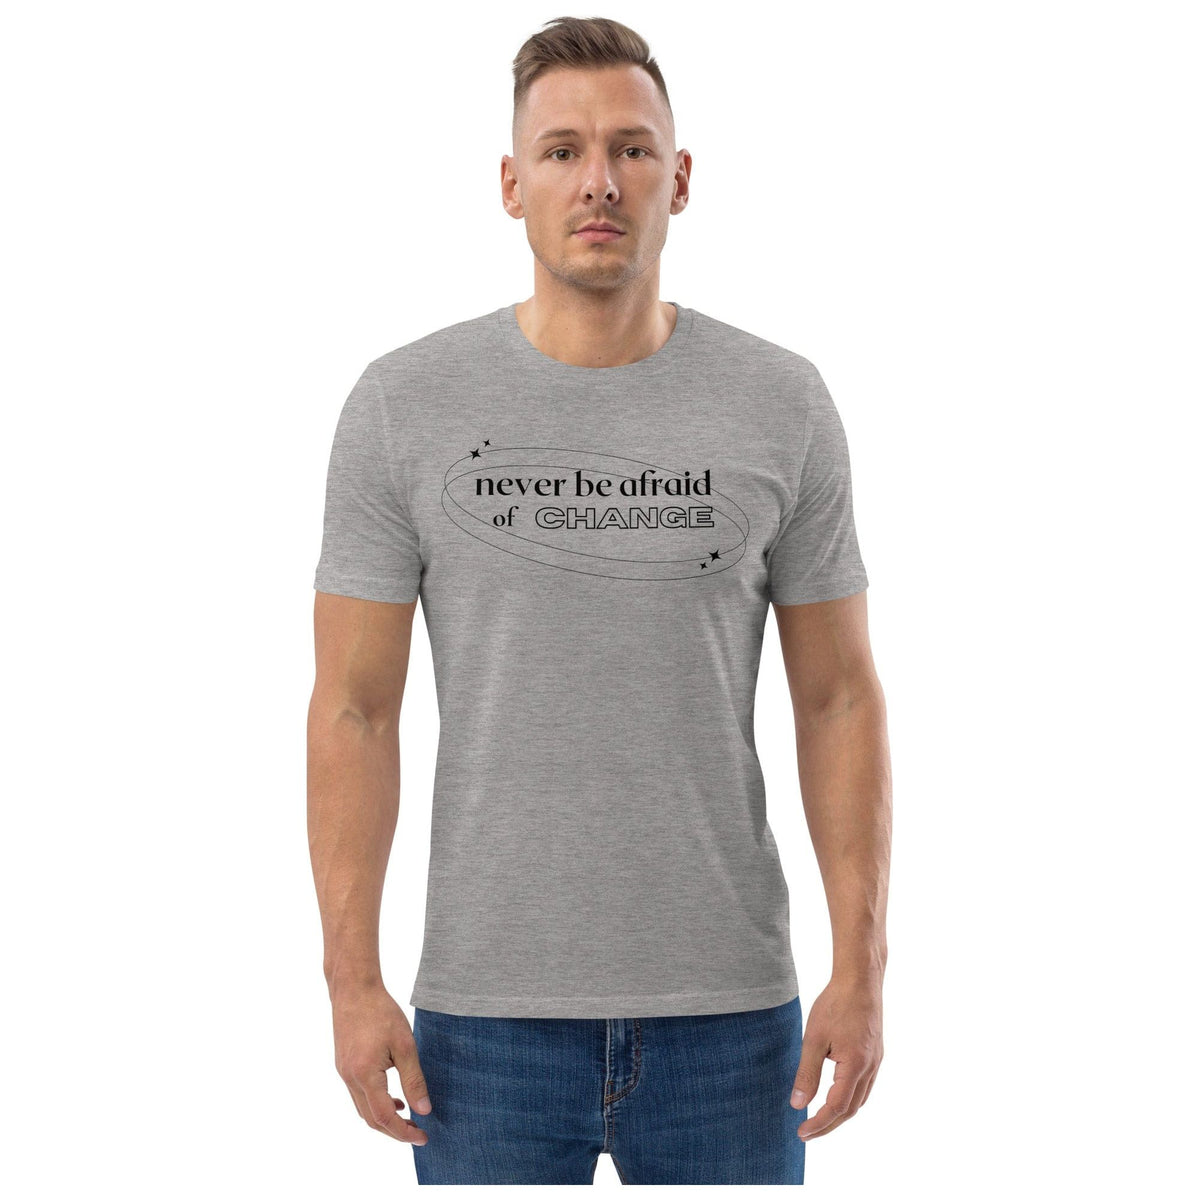 Karma Kiss T Shirt Heather Grey / S Never Be Afraid of Change - Unisex Organic Cotton T-Shirt